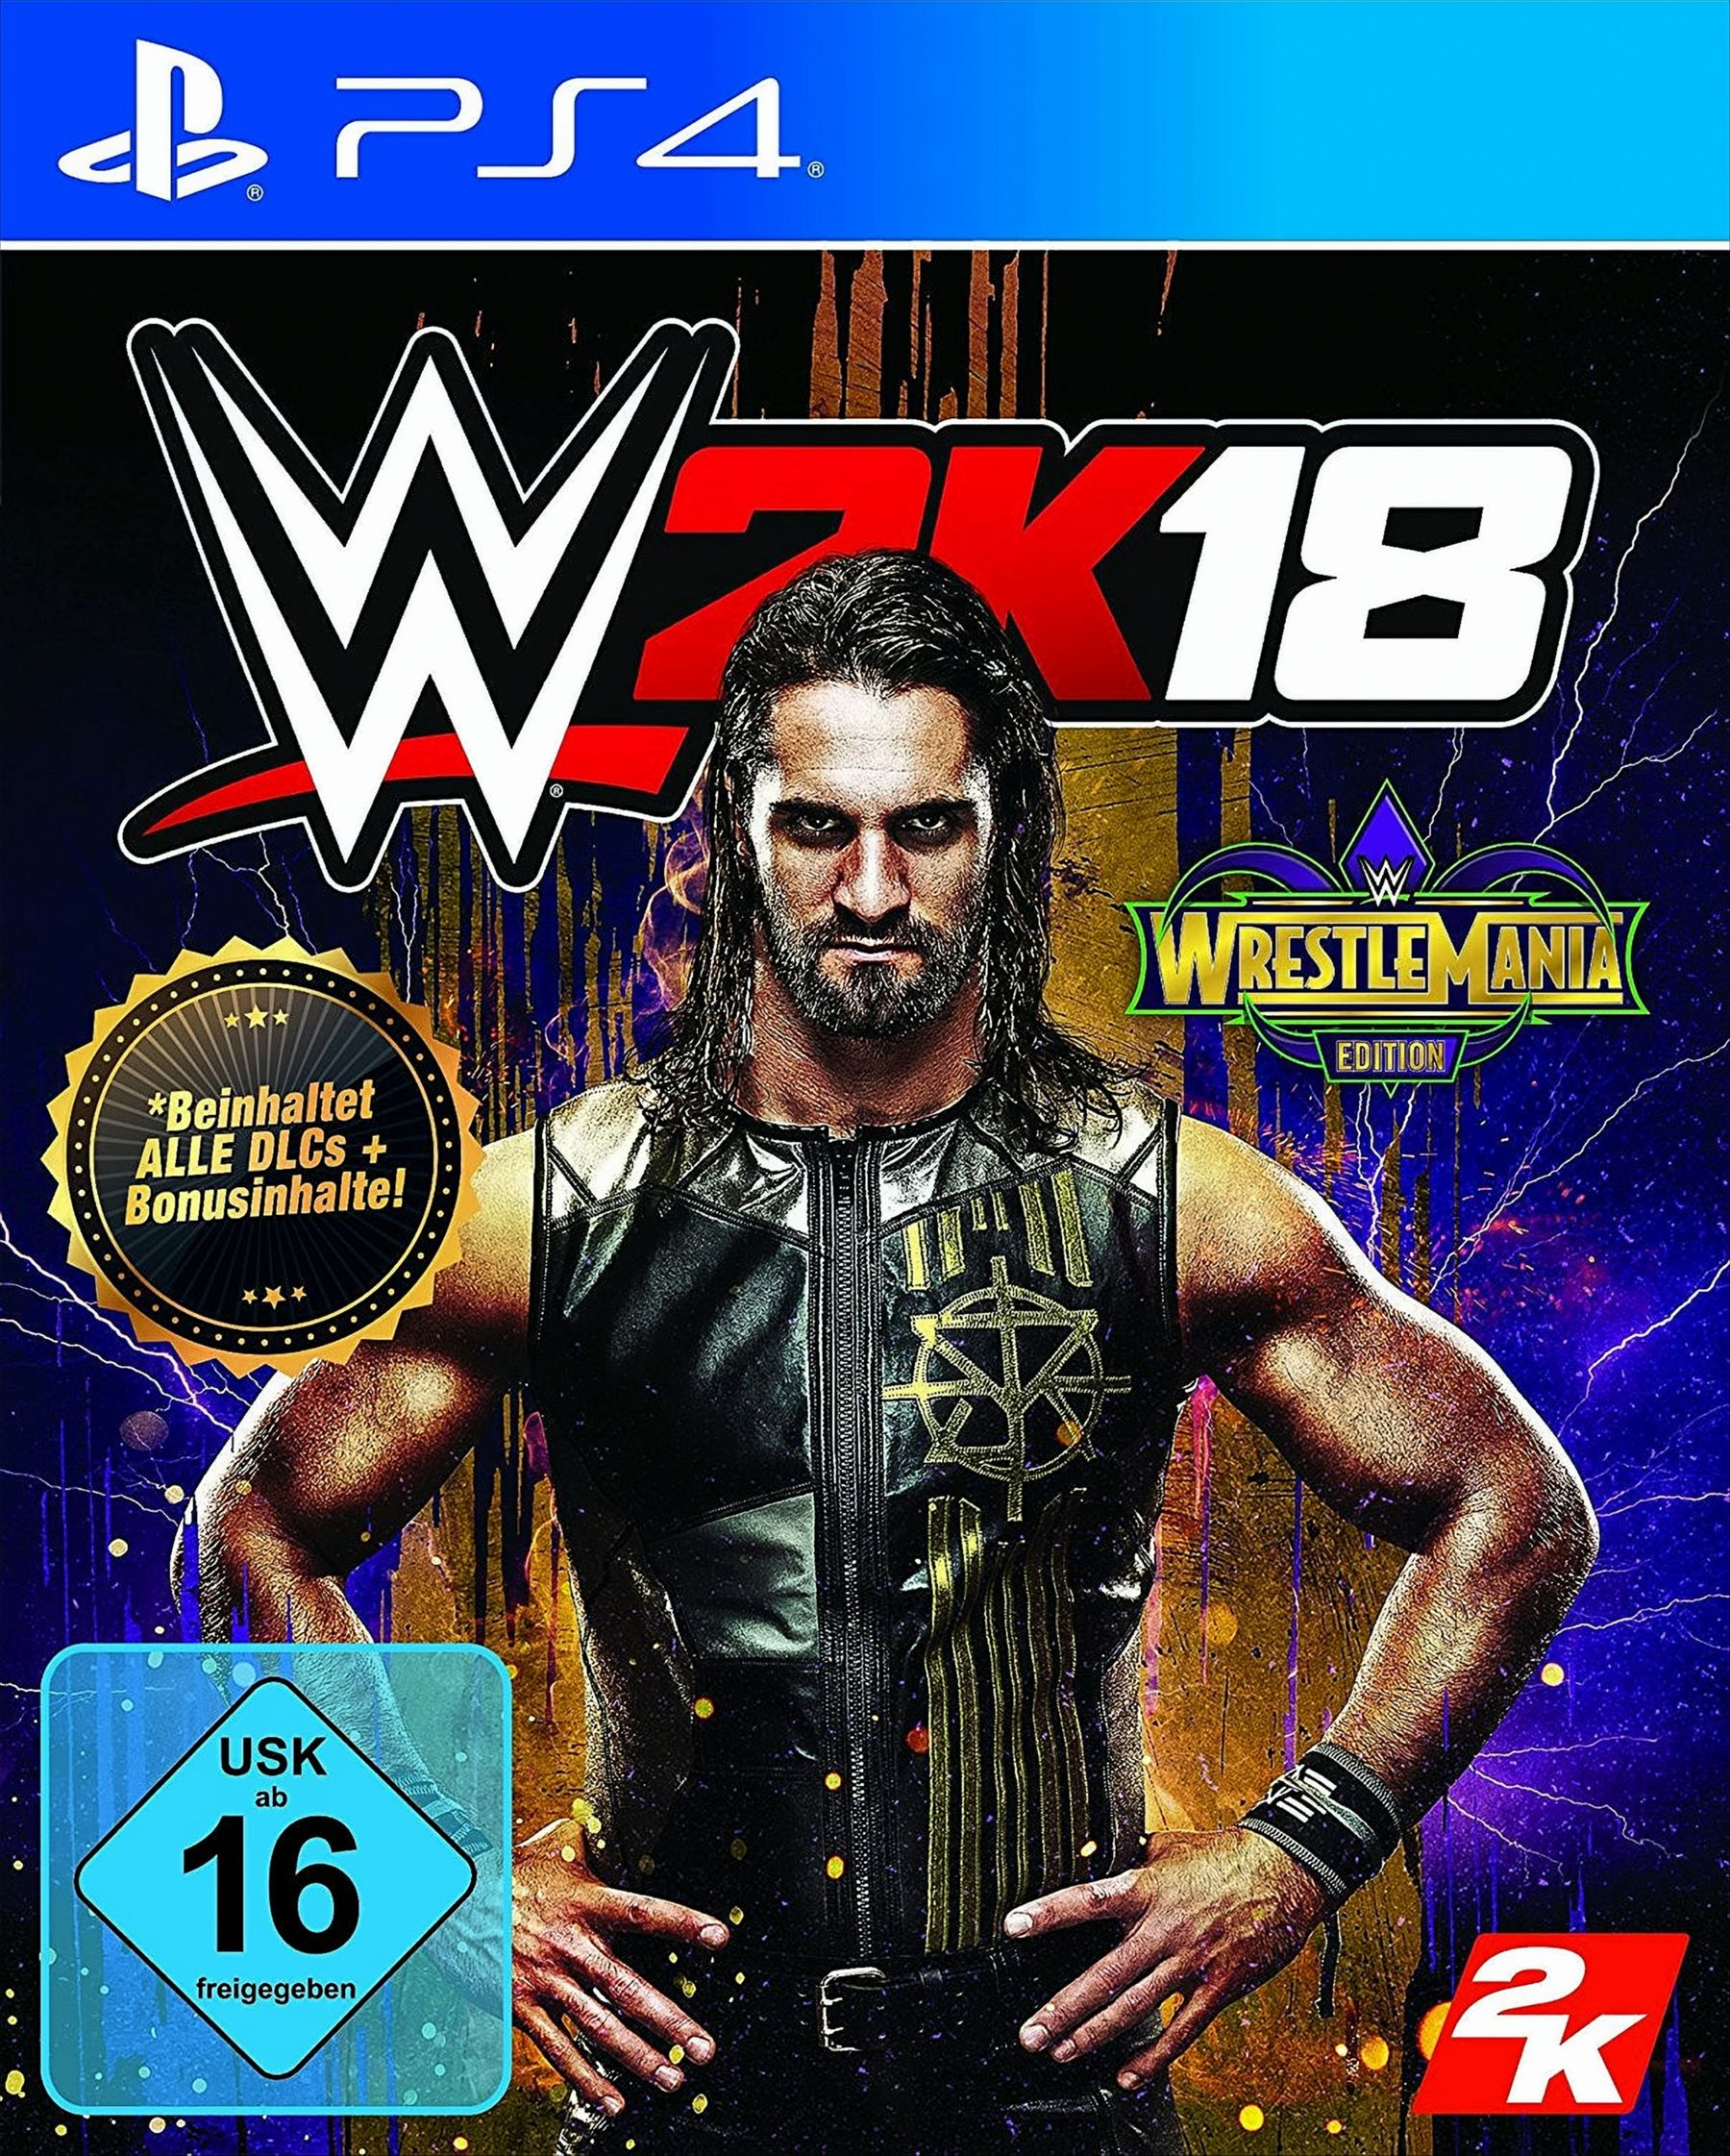 WWE 2K18 Wrestlemania - Edition PS4 [PlayStation 4